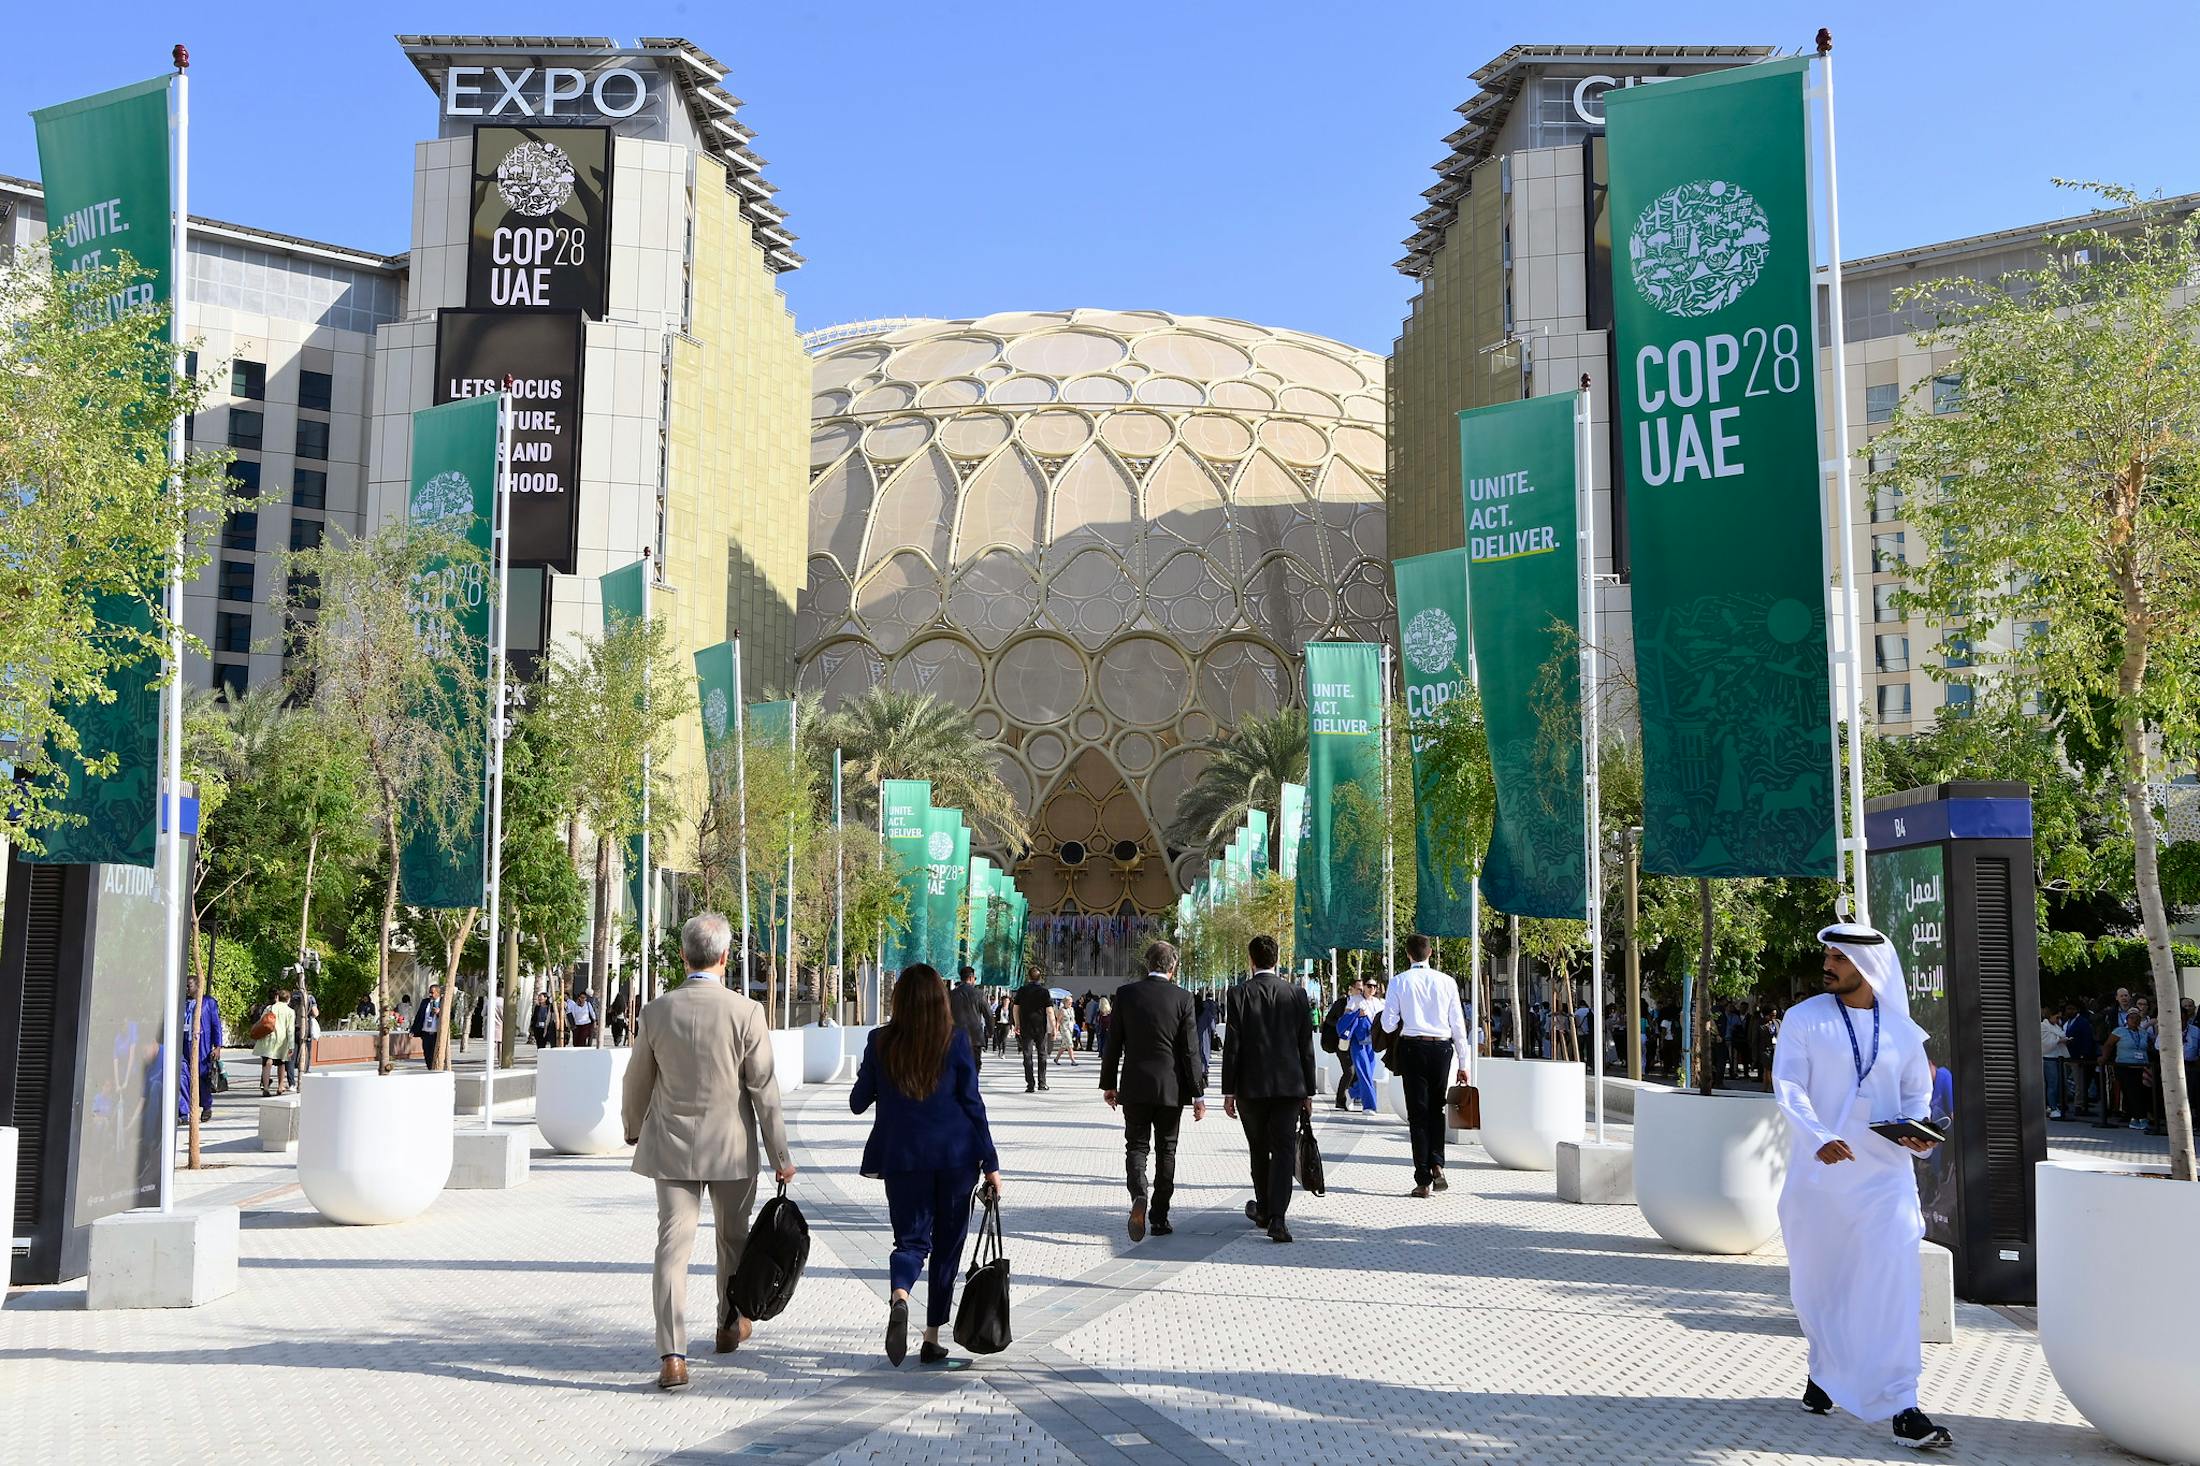 At Dubai's Expo, the world's problematic politics loom